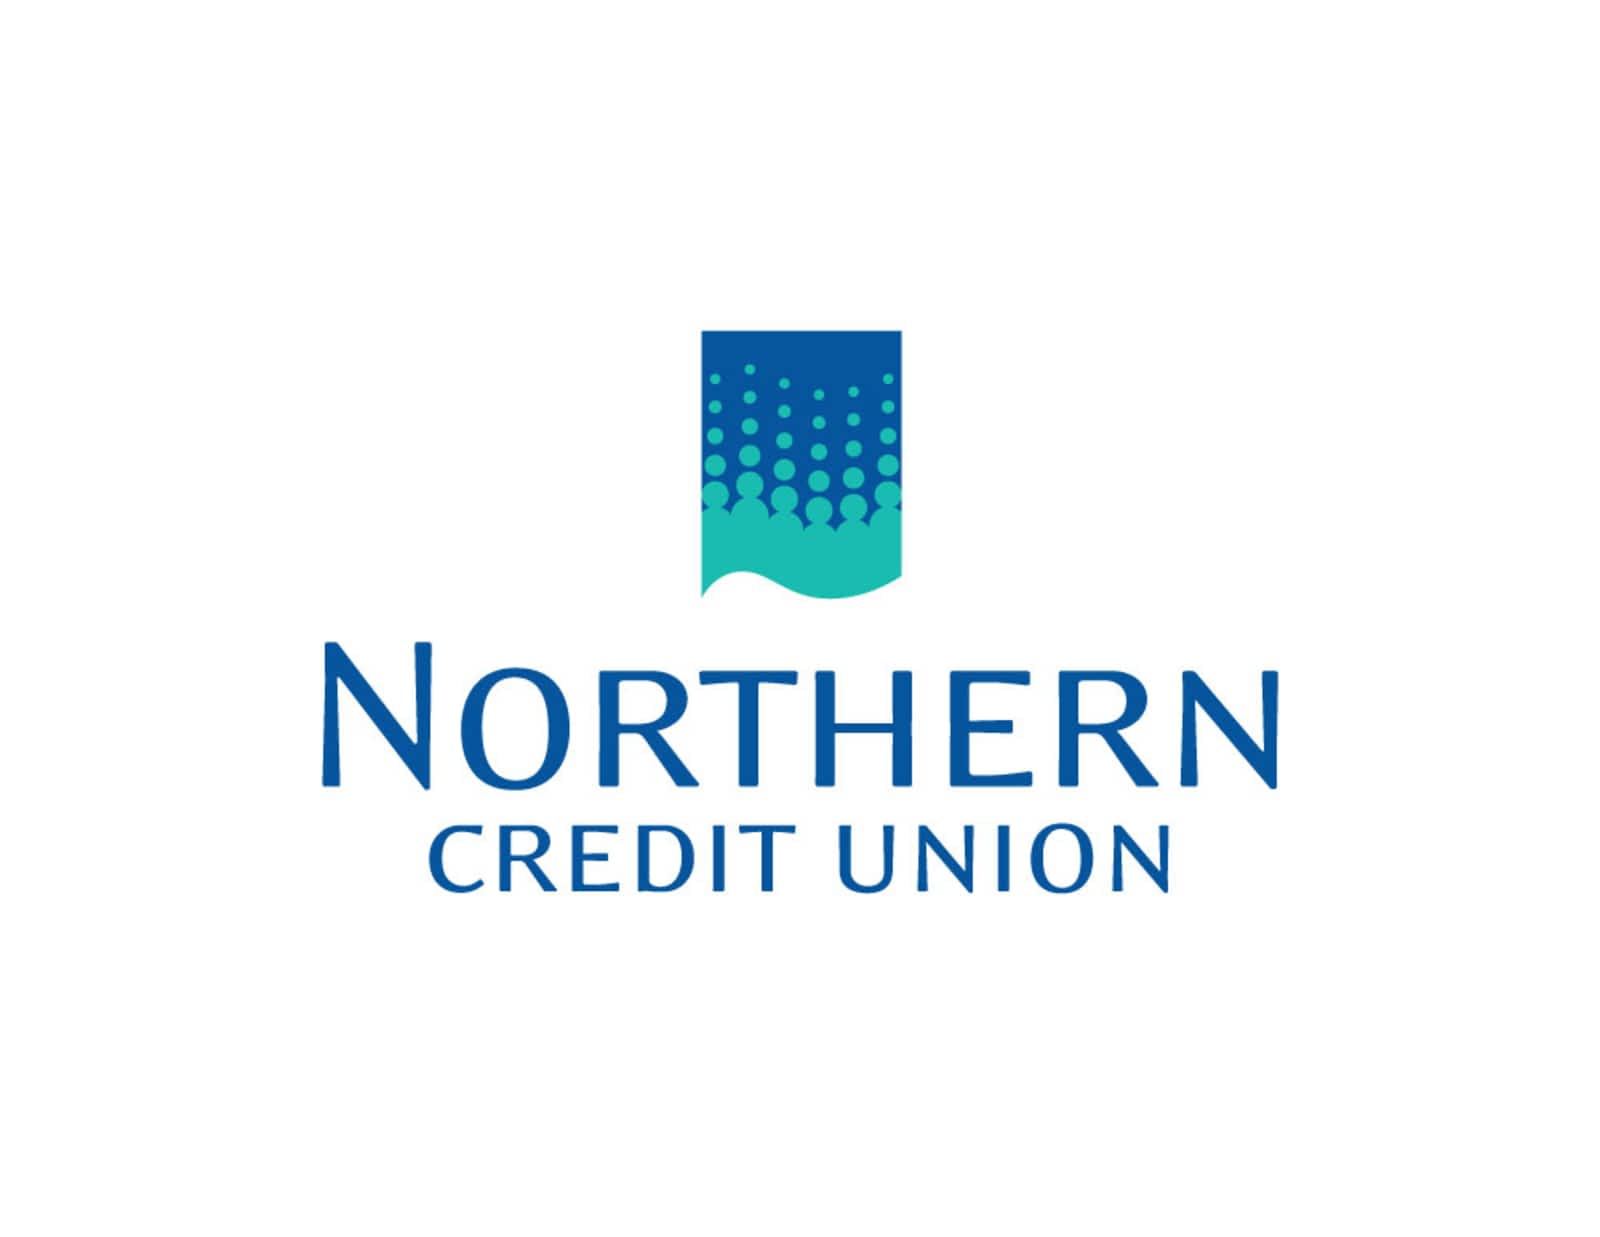 Northern Credit Union Ltd